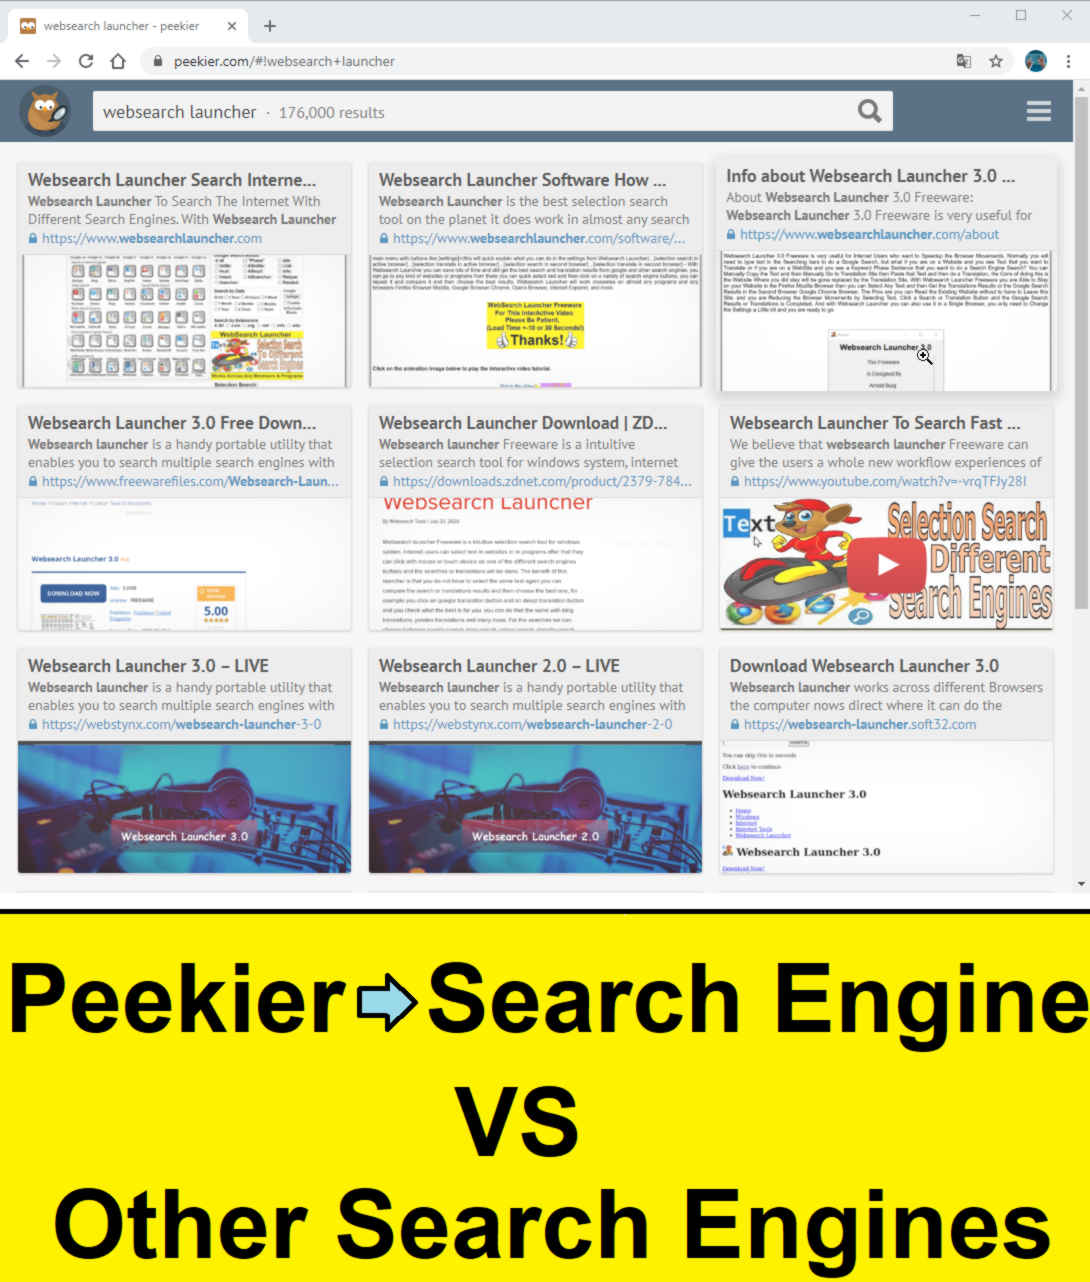 compare peekier search engine